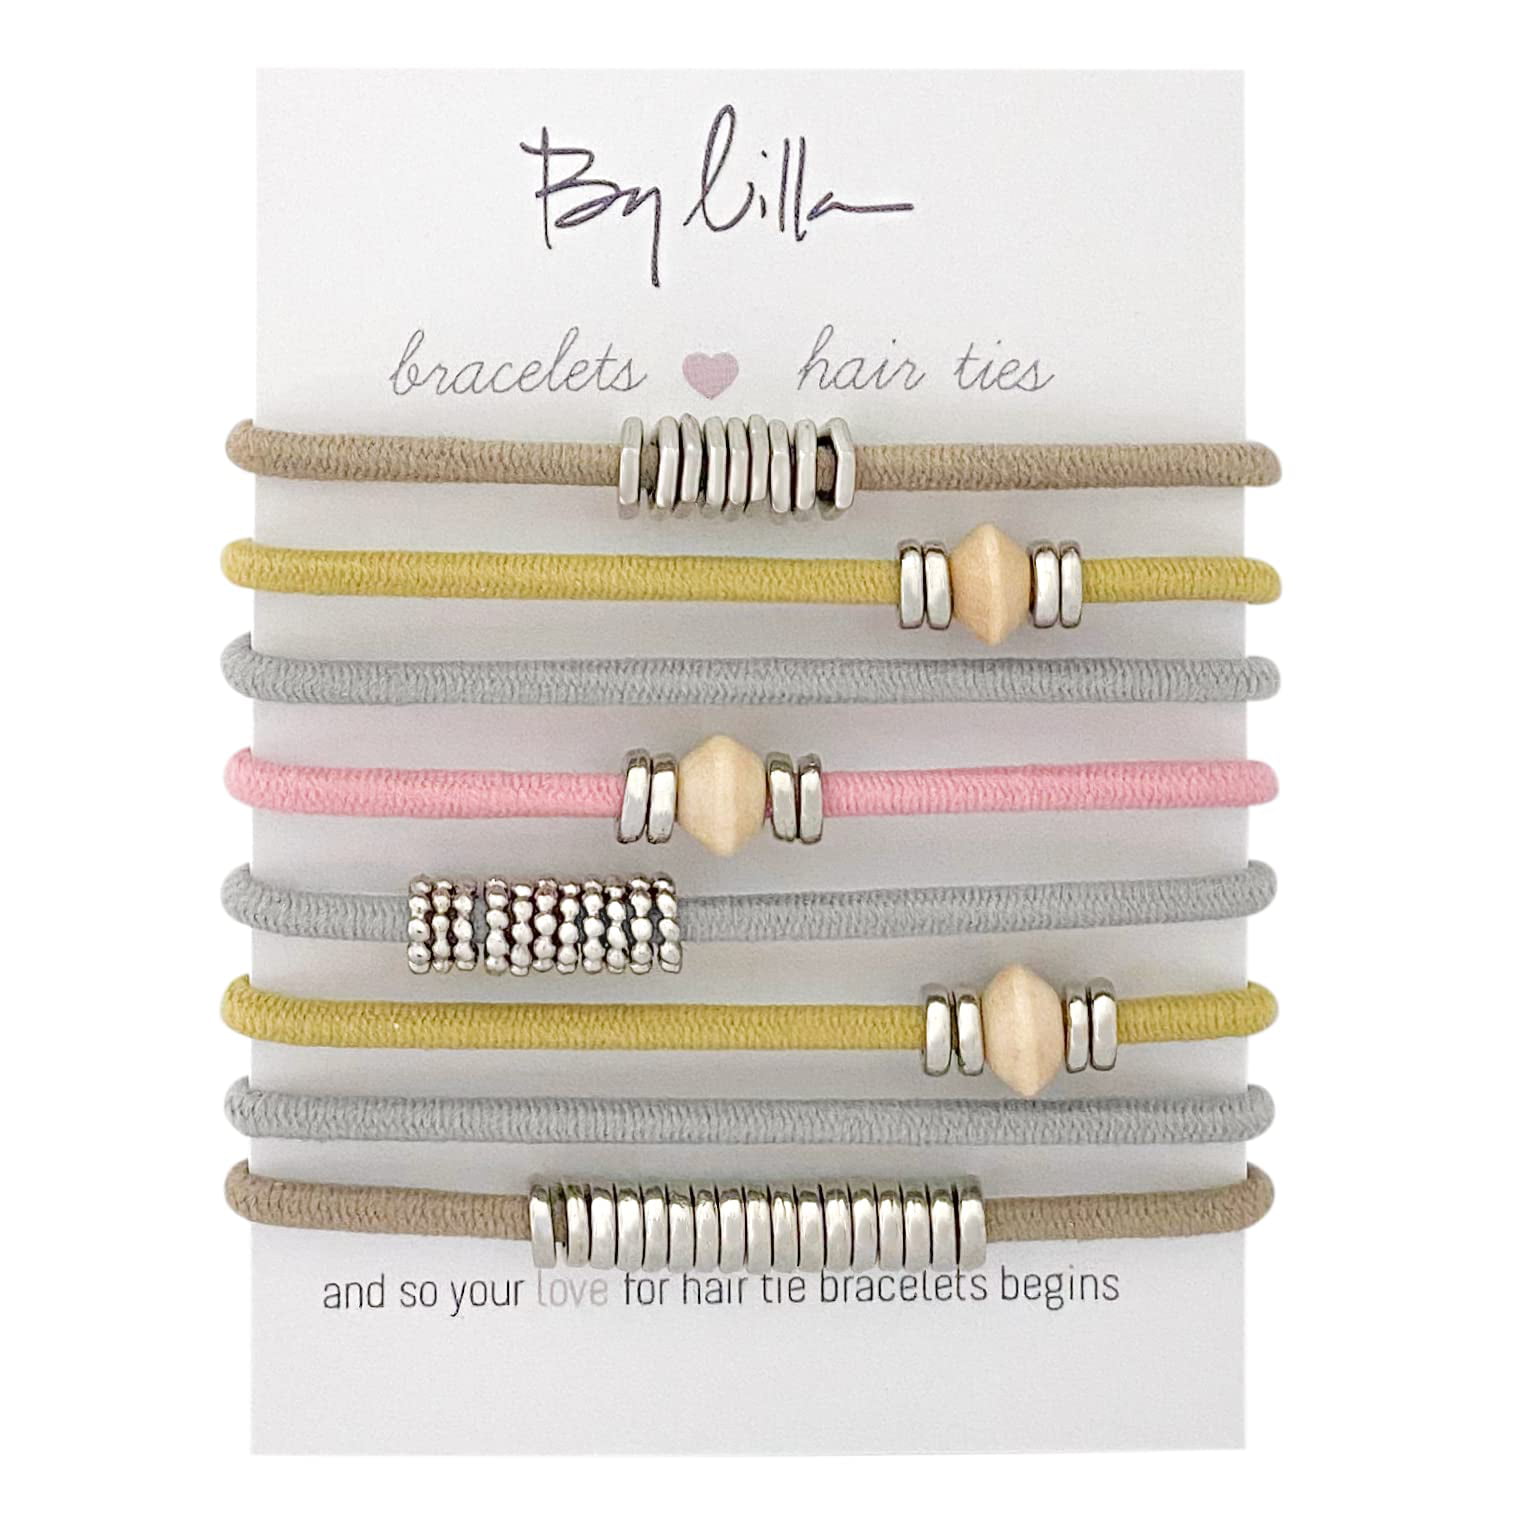 Bracelet Hair Tie - Grey Elastic Cord HT34W – Maya J